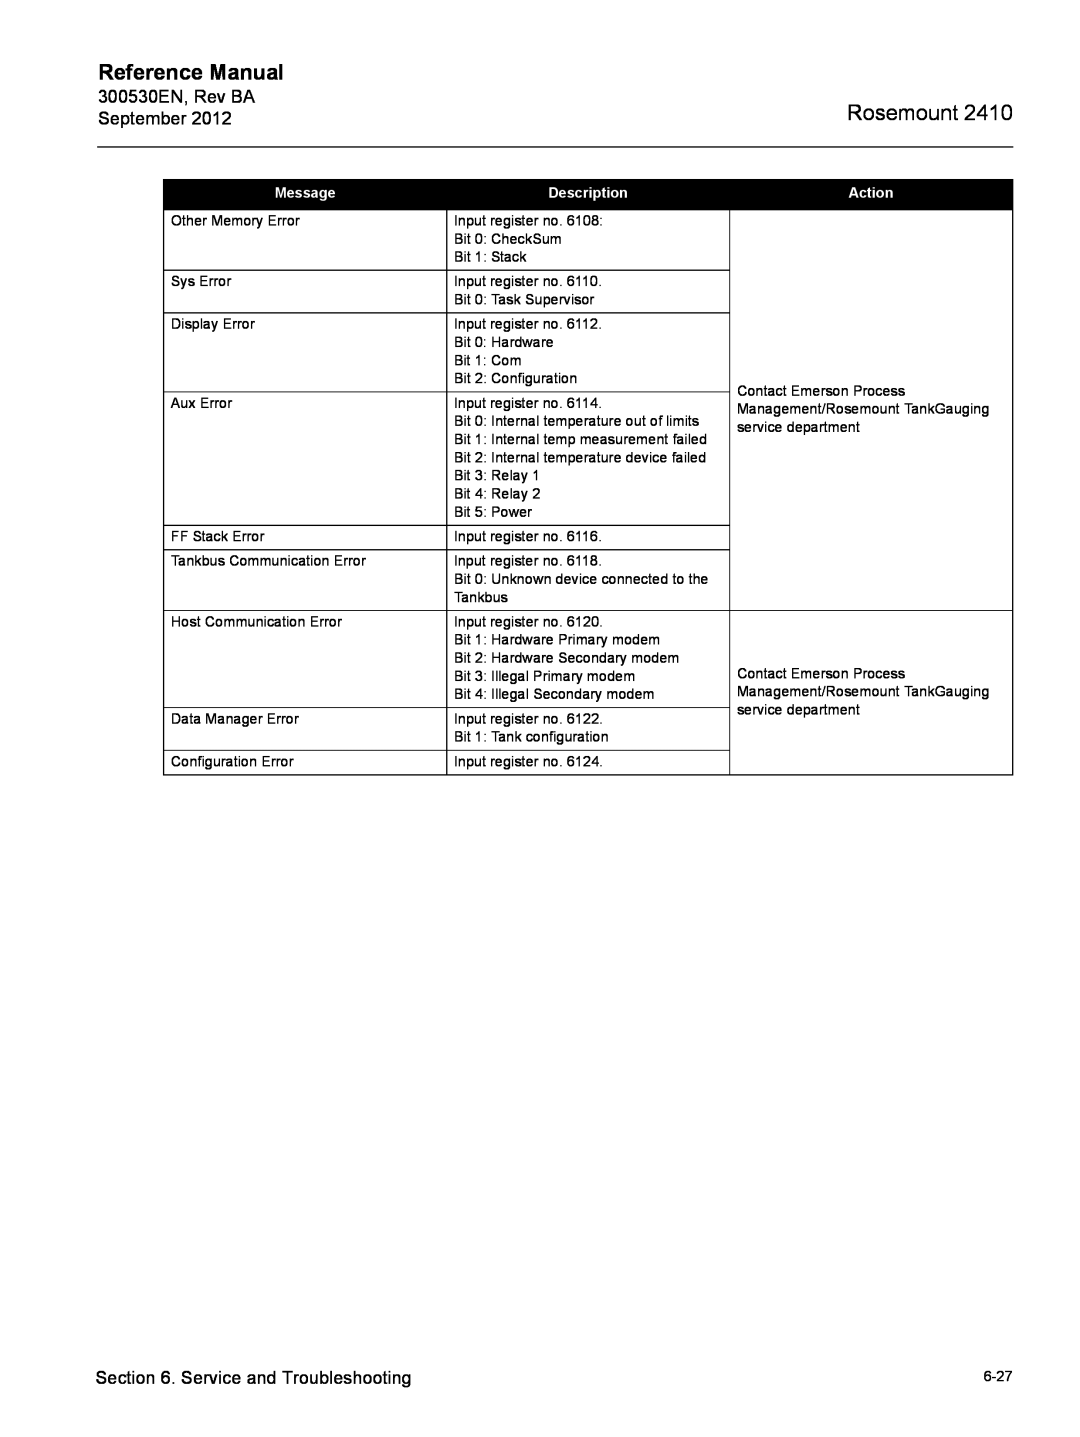 Emerson Process Management Rosemount 2410 manual Reference Manual 